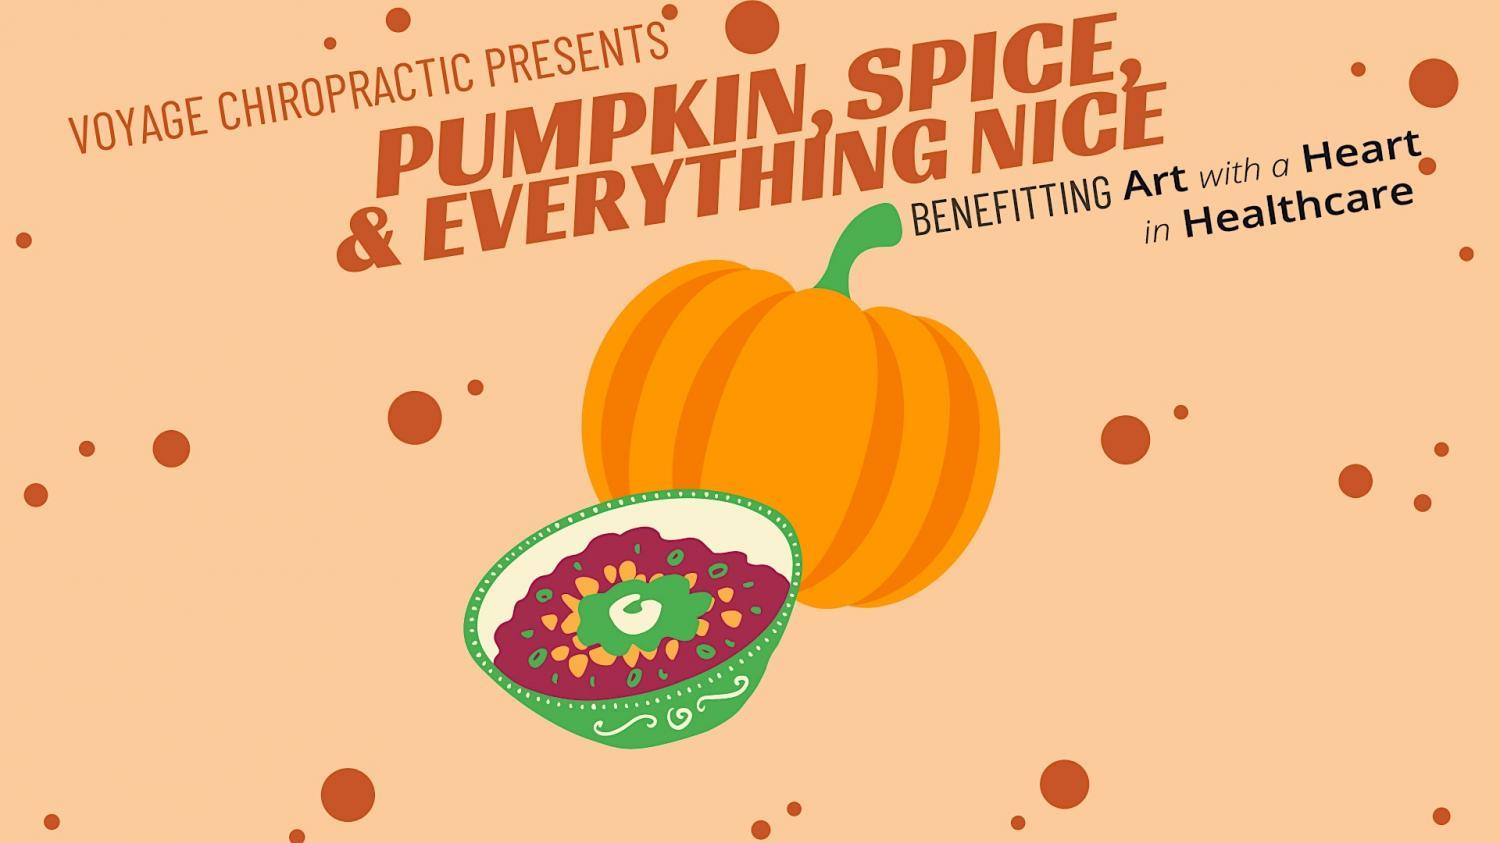 Pumpkin, Spice, and Everything Nice
Fri Oct 21, 7:00 PM - Fri Oct 21, 7:00 PM